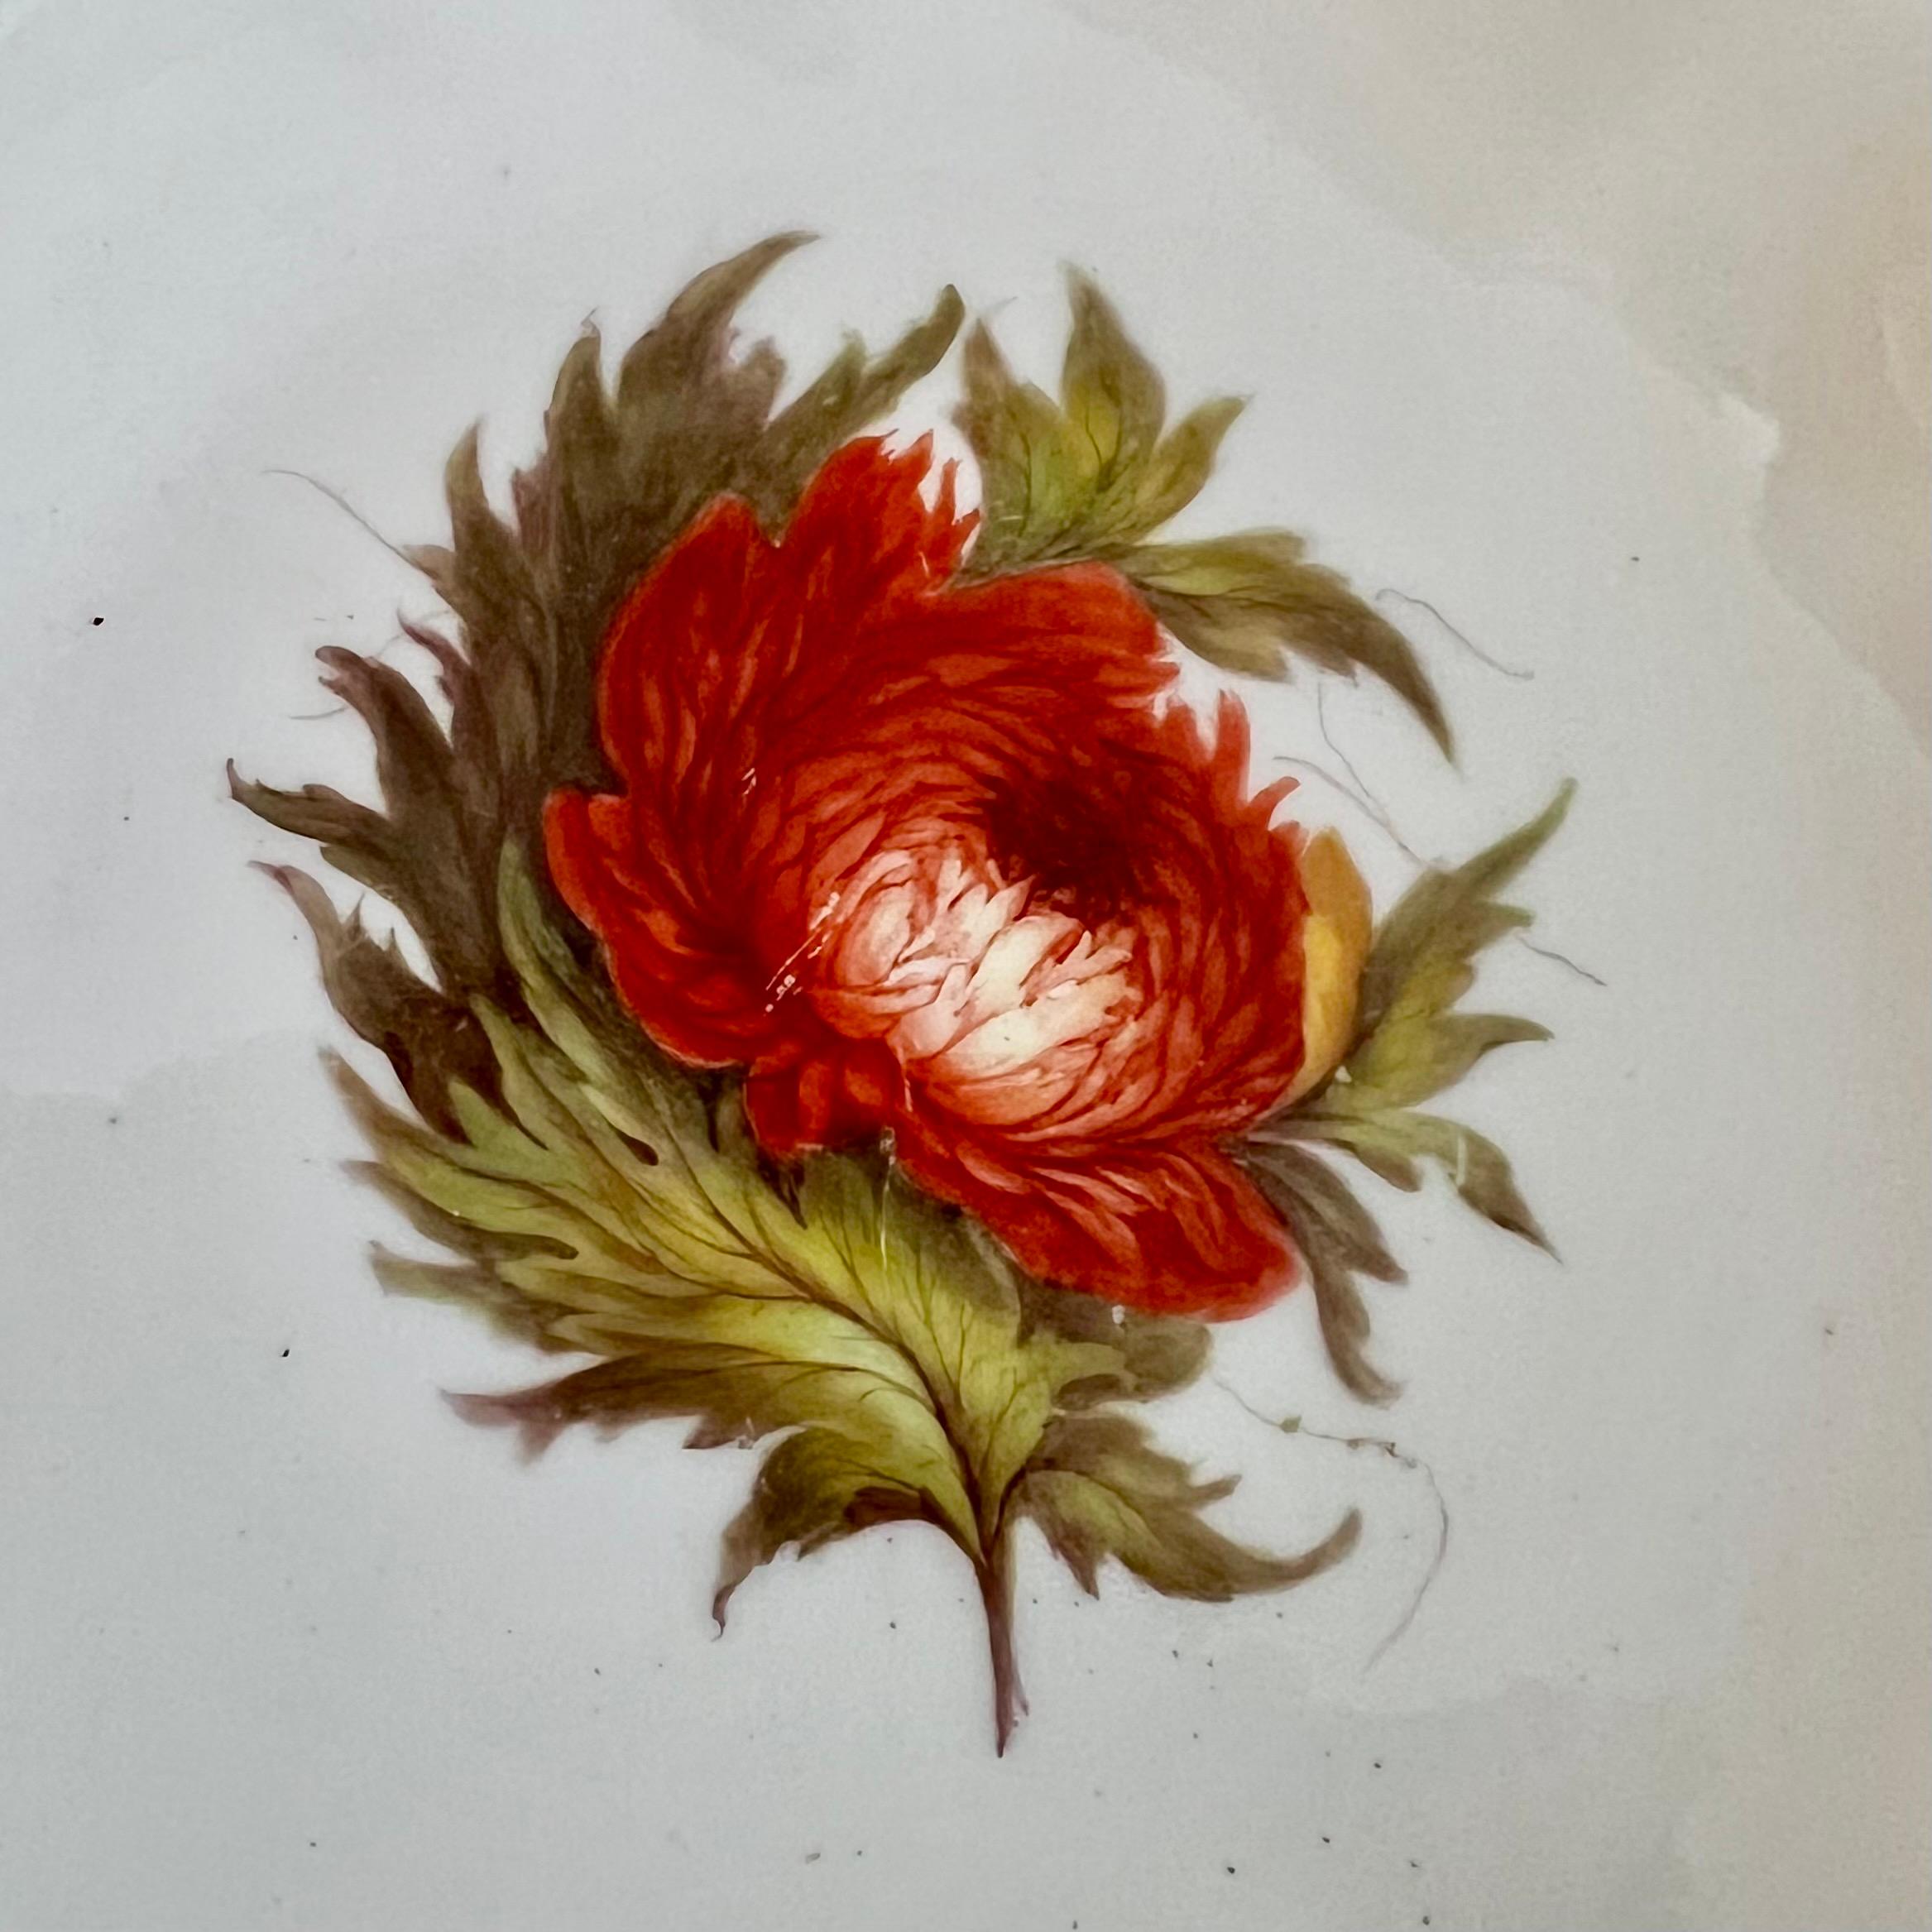 Barr Flight & Barr Part Dessert Service, Flowers by William Billingsley, 1808-10 For Sale 8